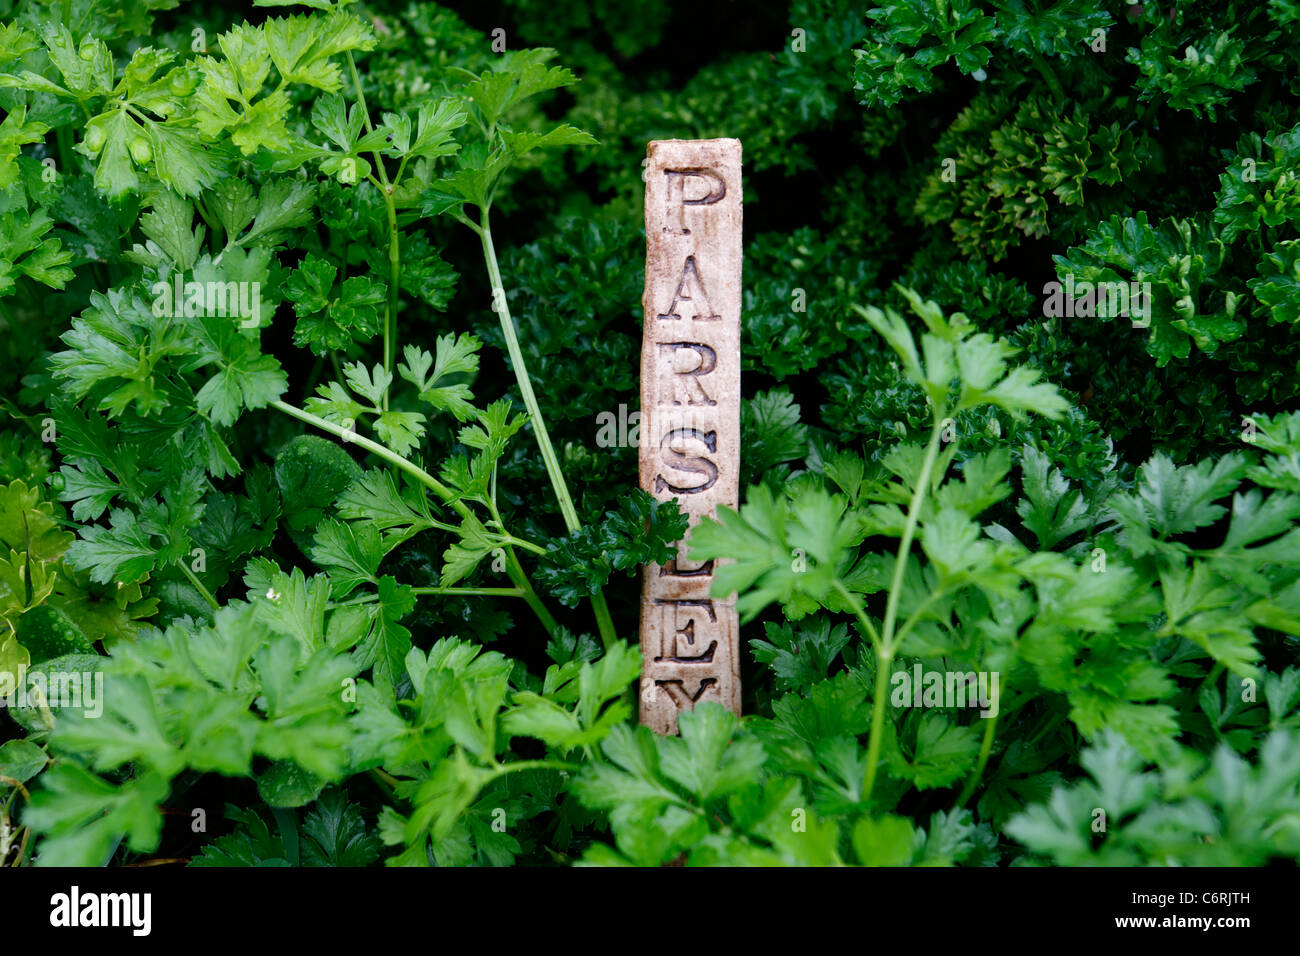 Garden parsley (Petroselinum crispum and Petroselinum Hortense). Stock Photo